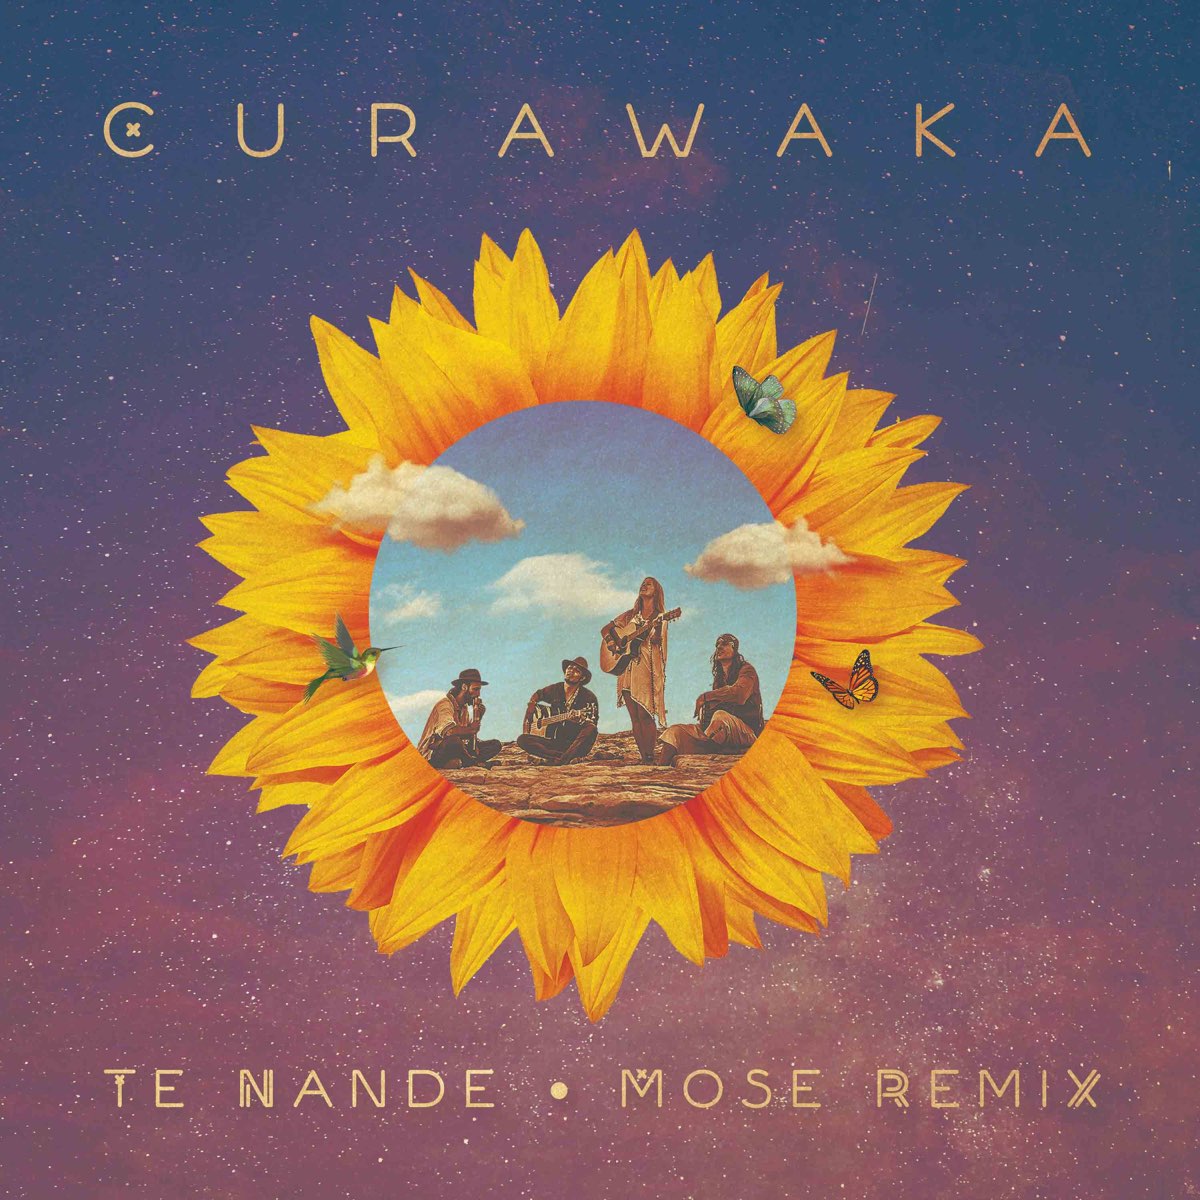 Te Nande (Mose Remix) - EP par Curawaka & Mose sur Apple Music